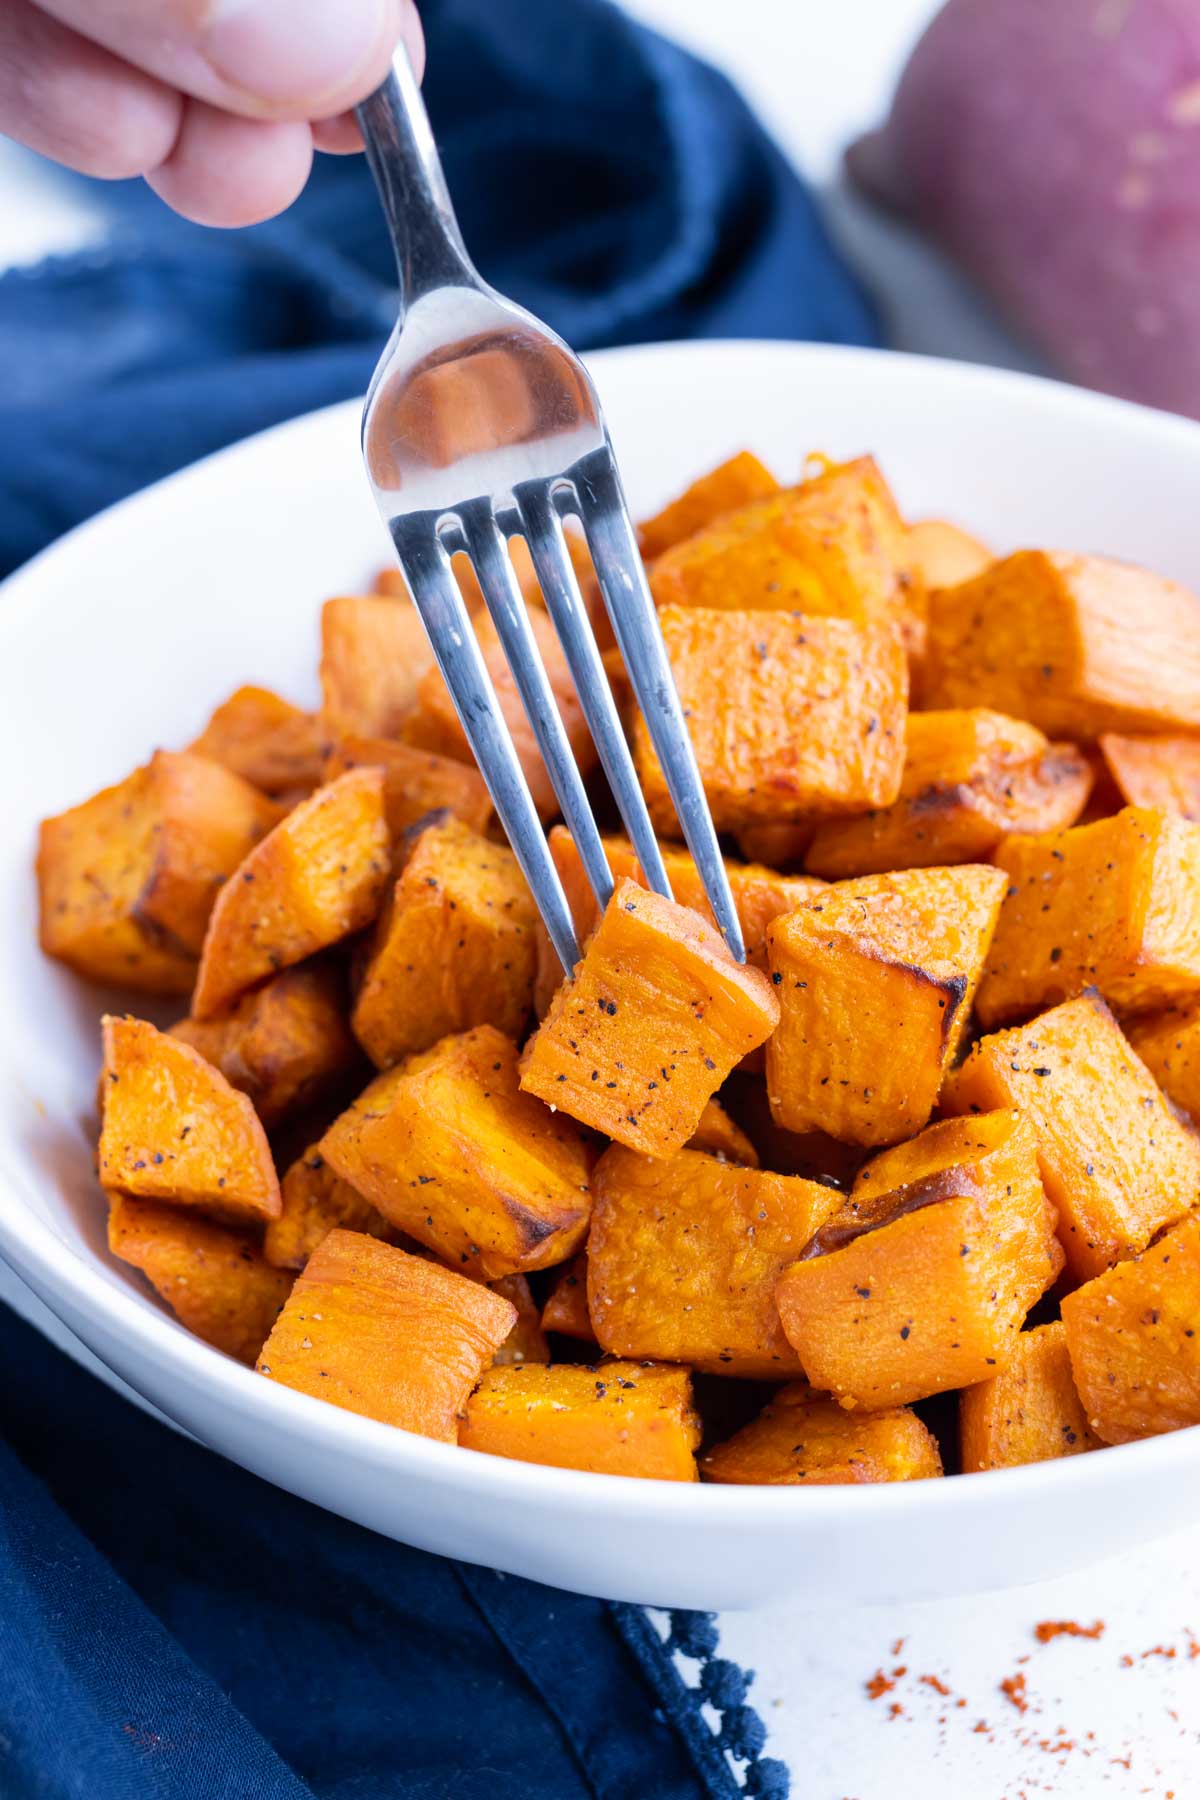 Enjoy air fryer sweet potatoes with dinner.